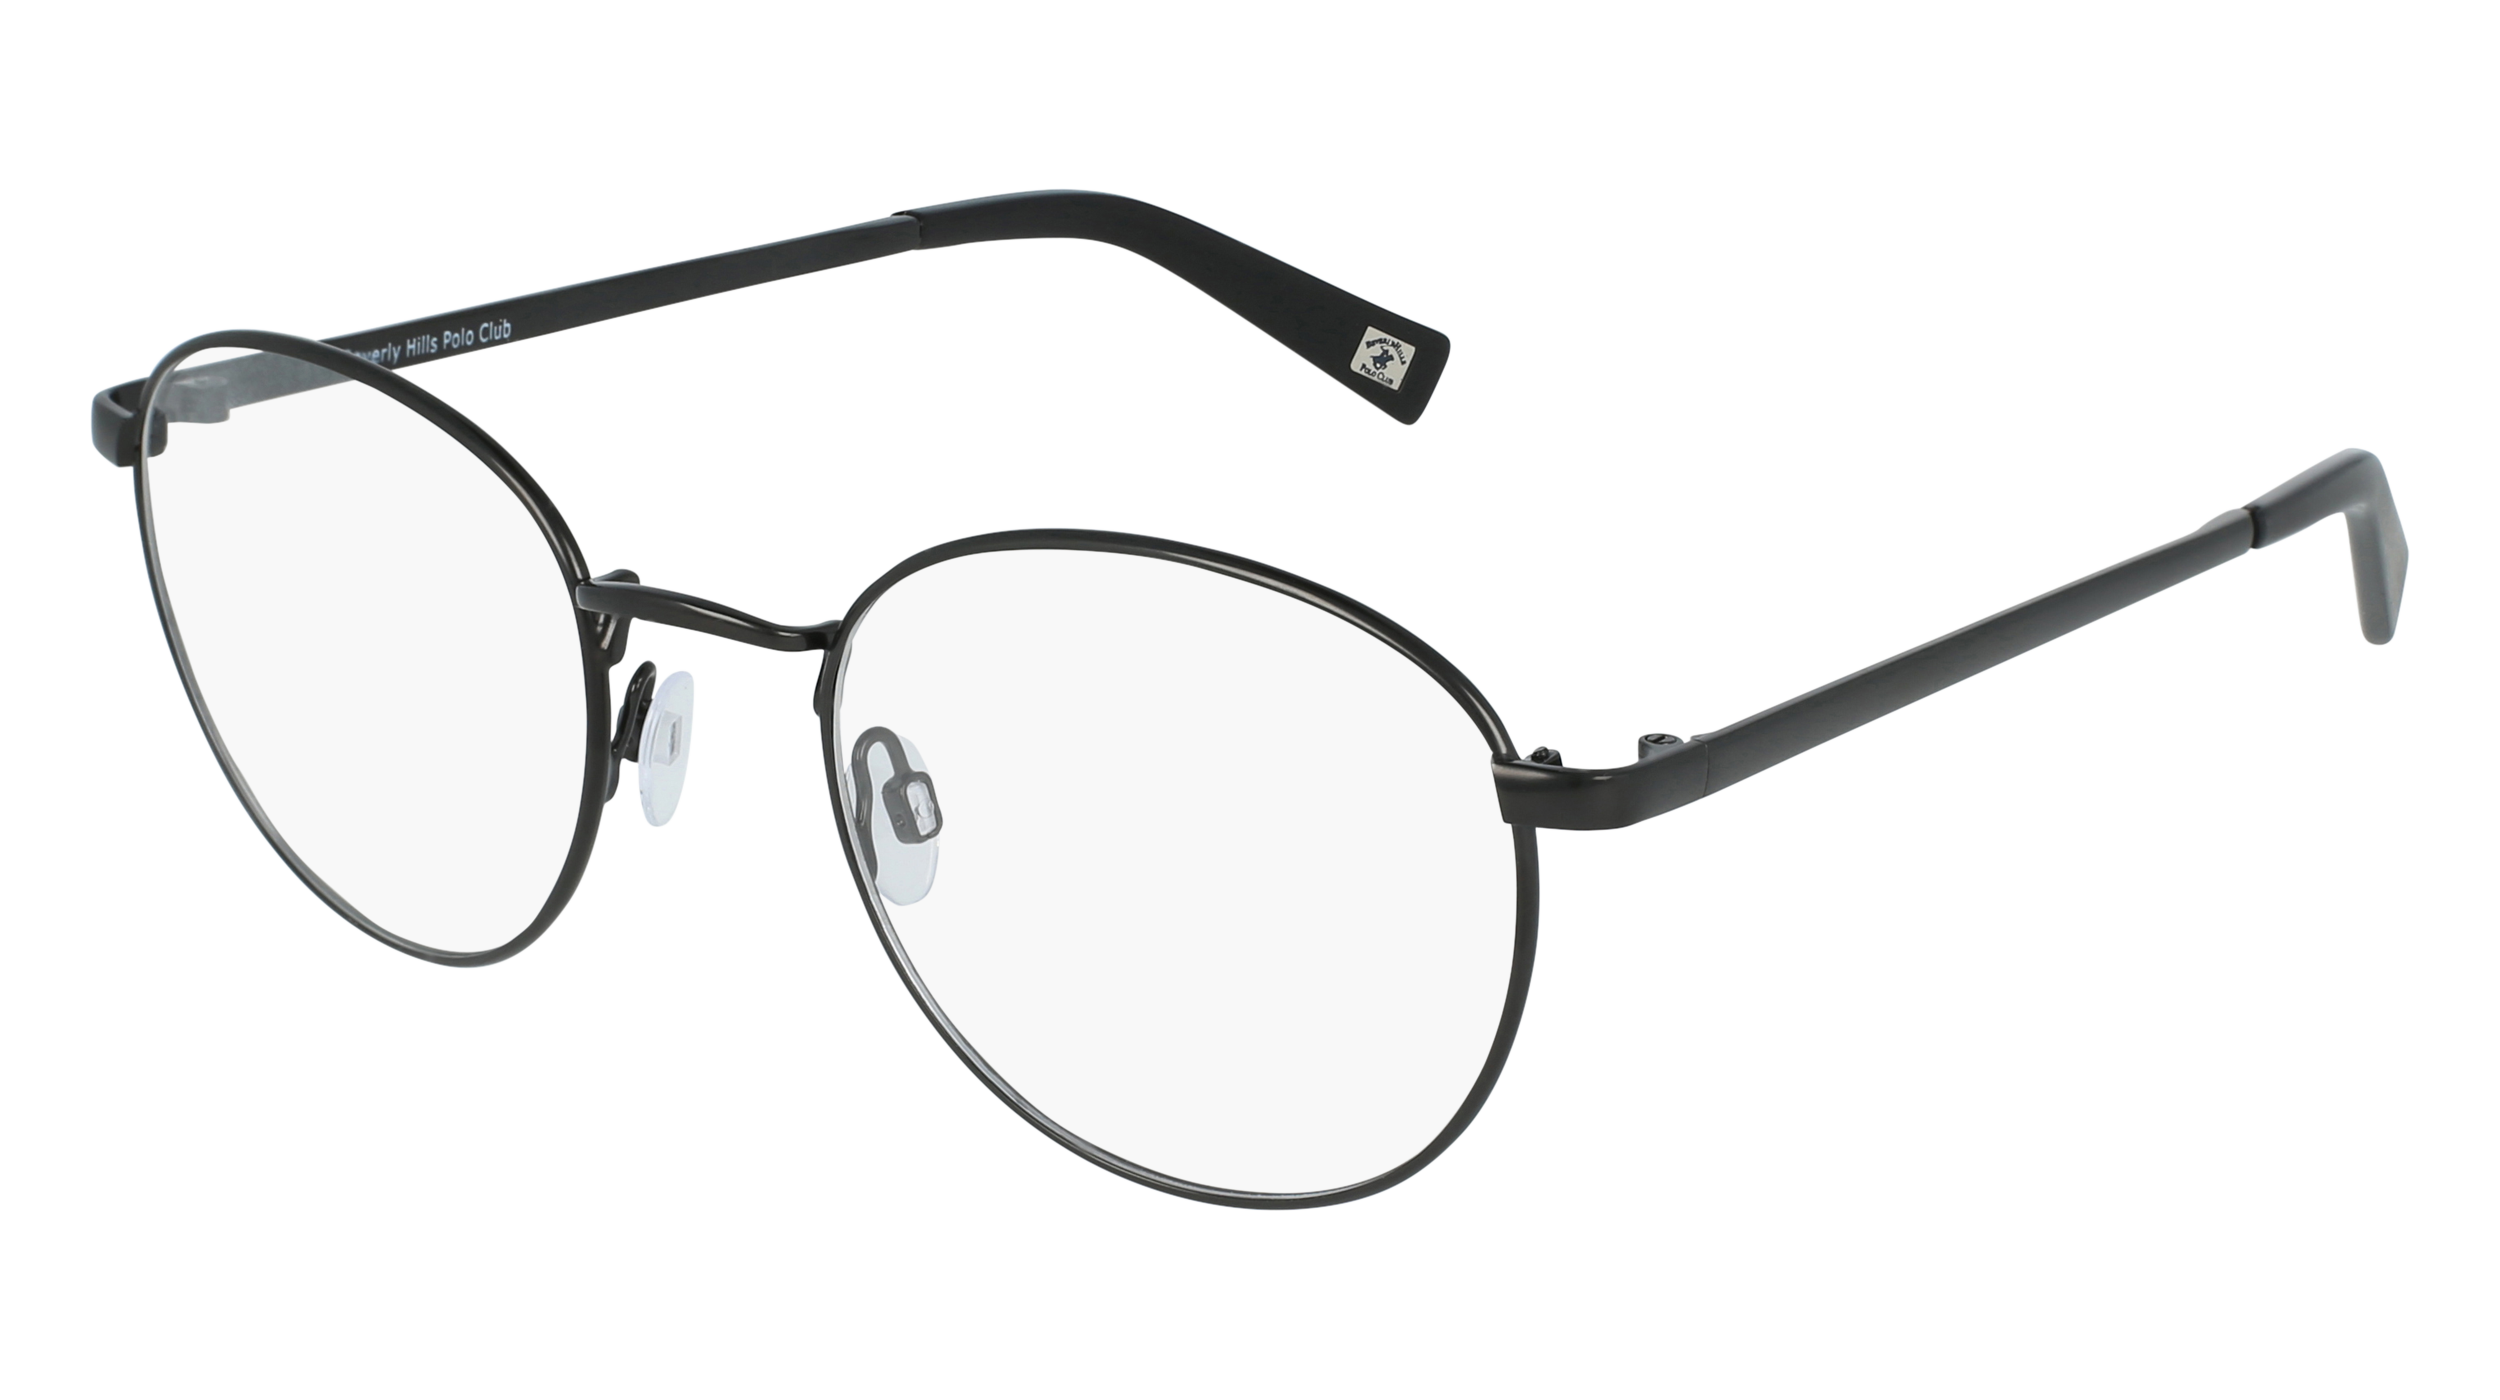 Beverly Hills Polo Club Bhpc 78 Black Women S Eyeglasses Meijer Optical